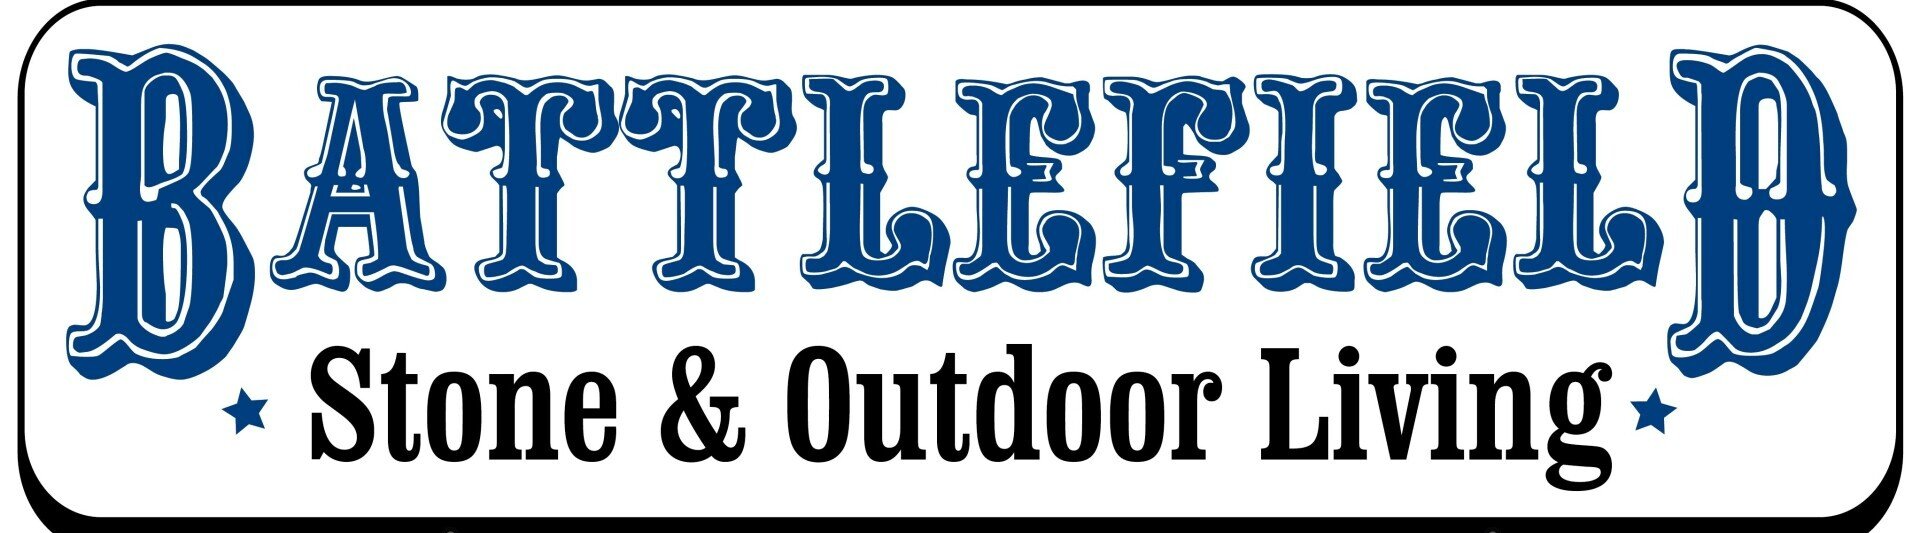 Battlefield Stone & Outdoor Living logo